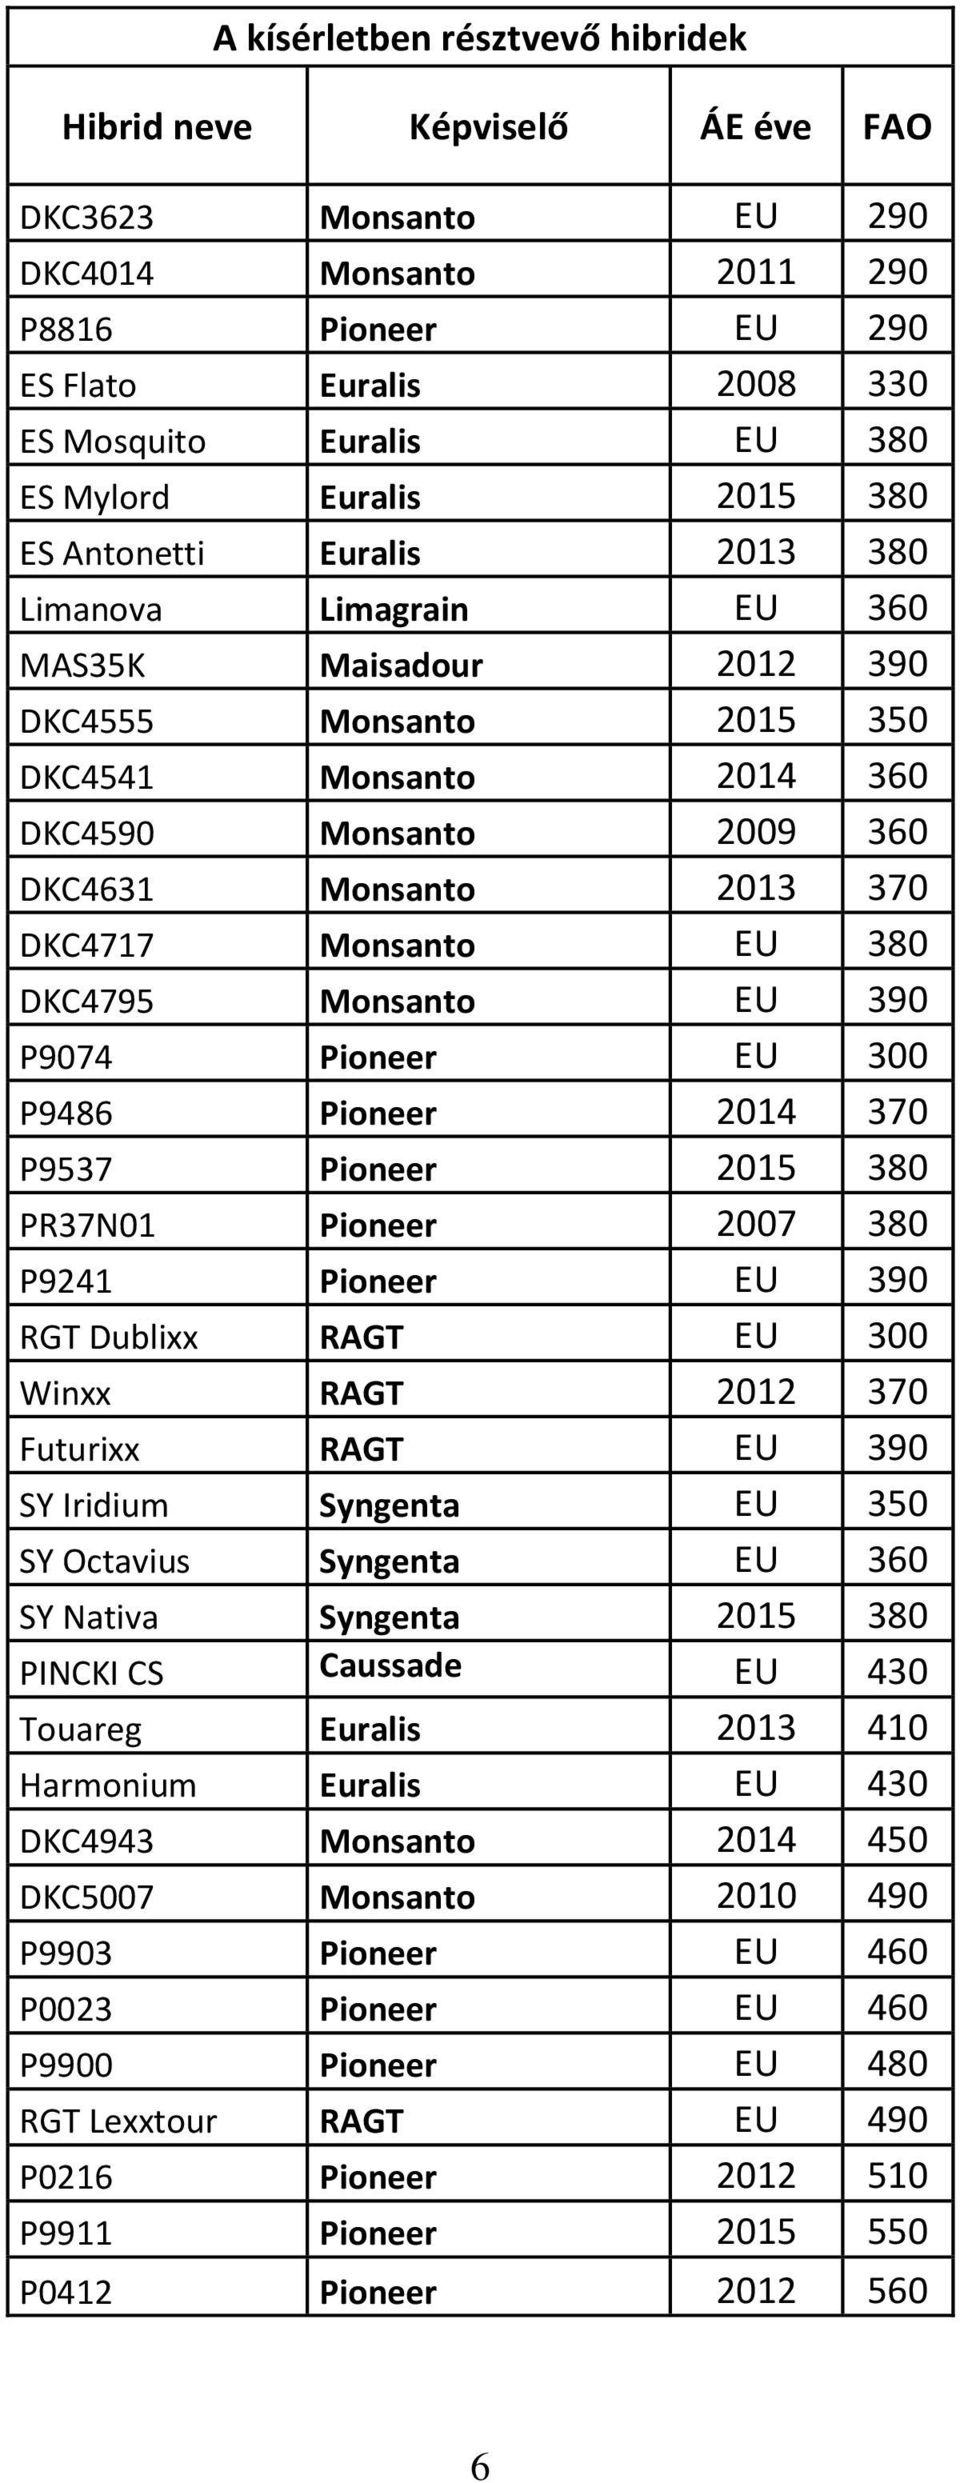 DKC4717 Monsanto EU 380 DKC4795 Monsanto EU 390 P9074 Pioneer EU 300 P9486 Pioneer 2014 370 P9537 Pioneer 380 PR37N01 Pioneer 2007 380 P9241 Pioneer EU 390 RGT Dublixx RAGT EU 300 Winxx RAGT 2012 370